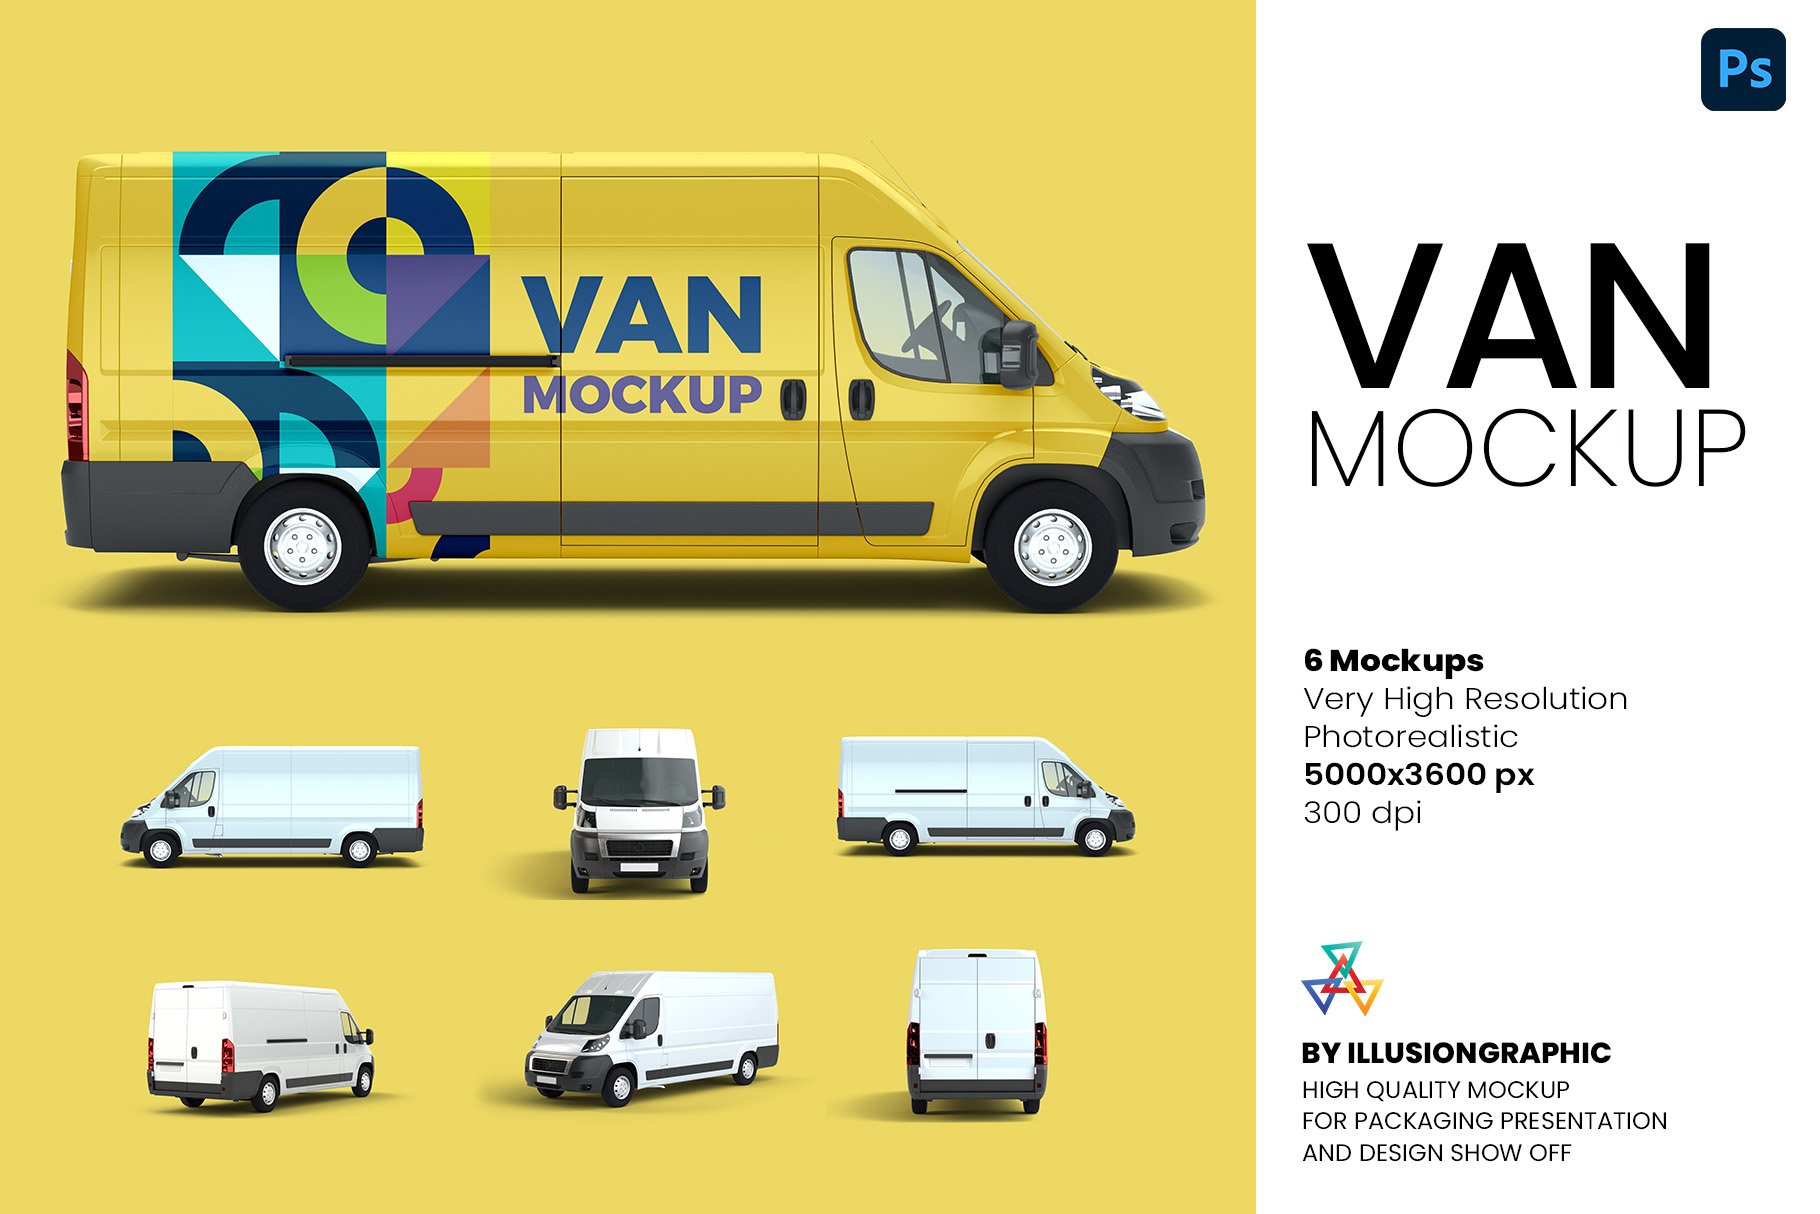 Van Mockup - 6 views cover image.